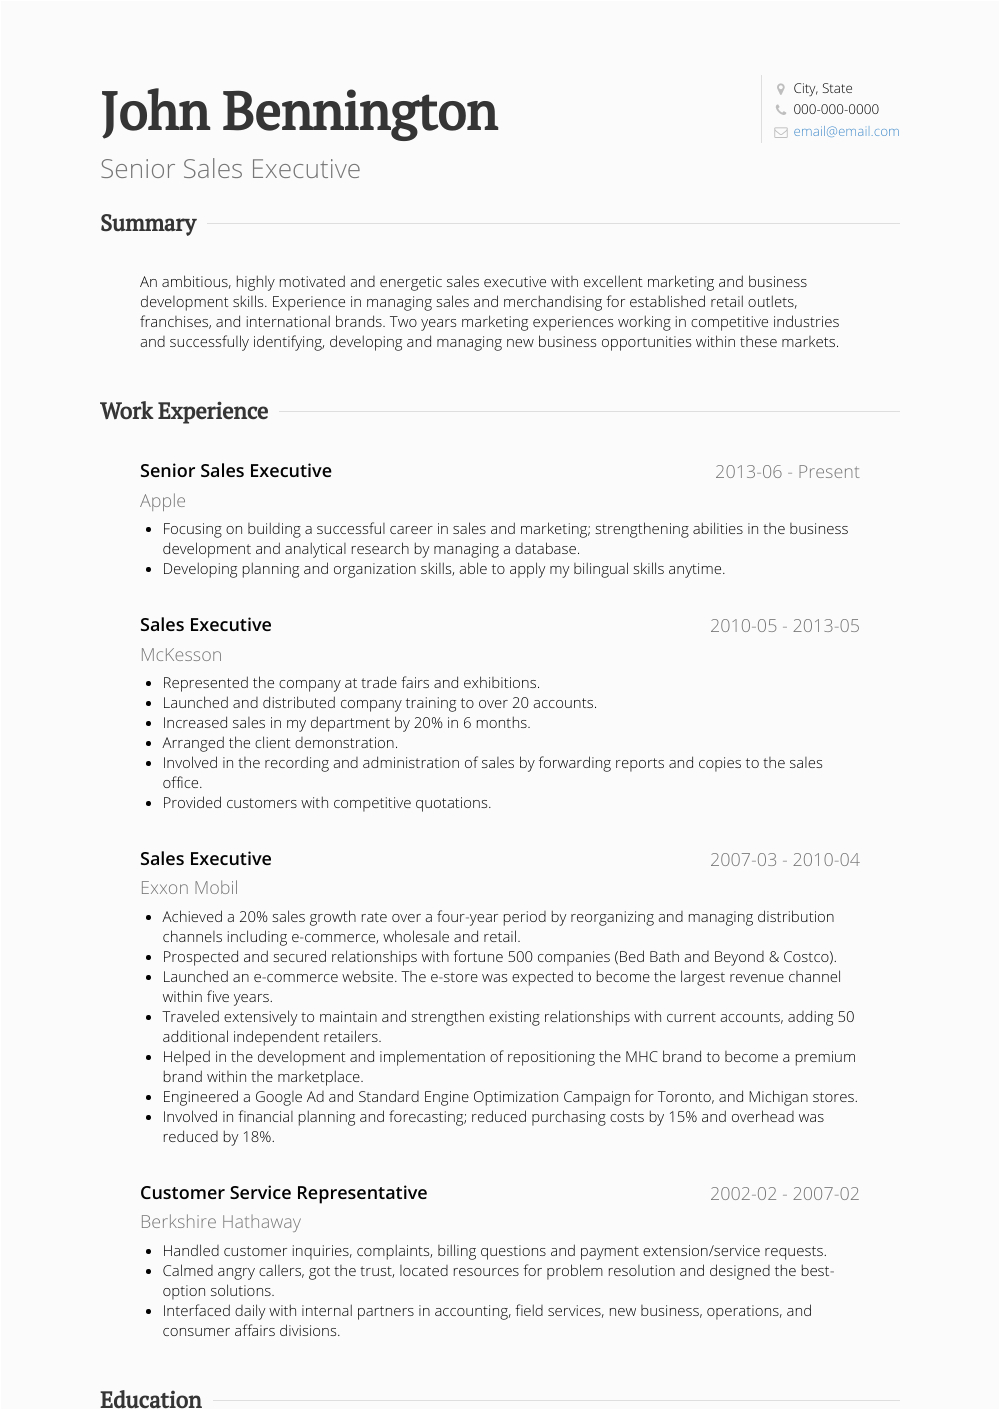 Sample Resume for Senior Sales Executive Senior Sales Executive Resume Samples and Templates